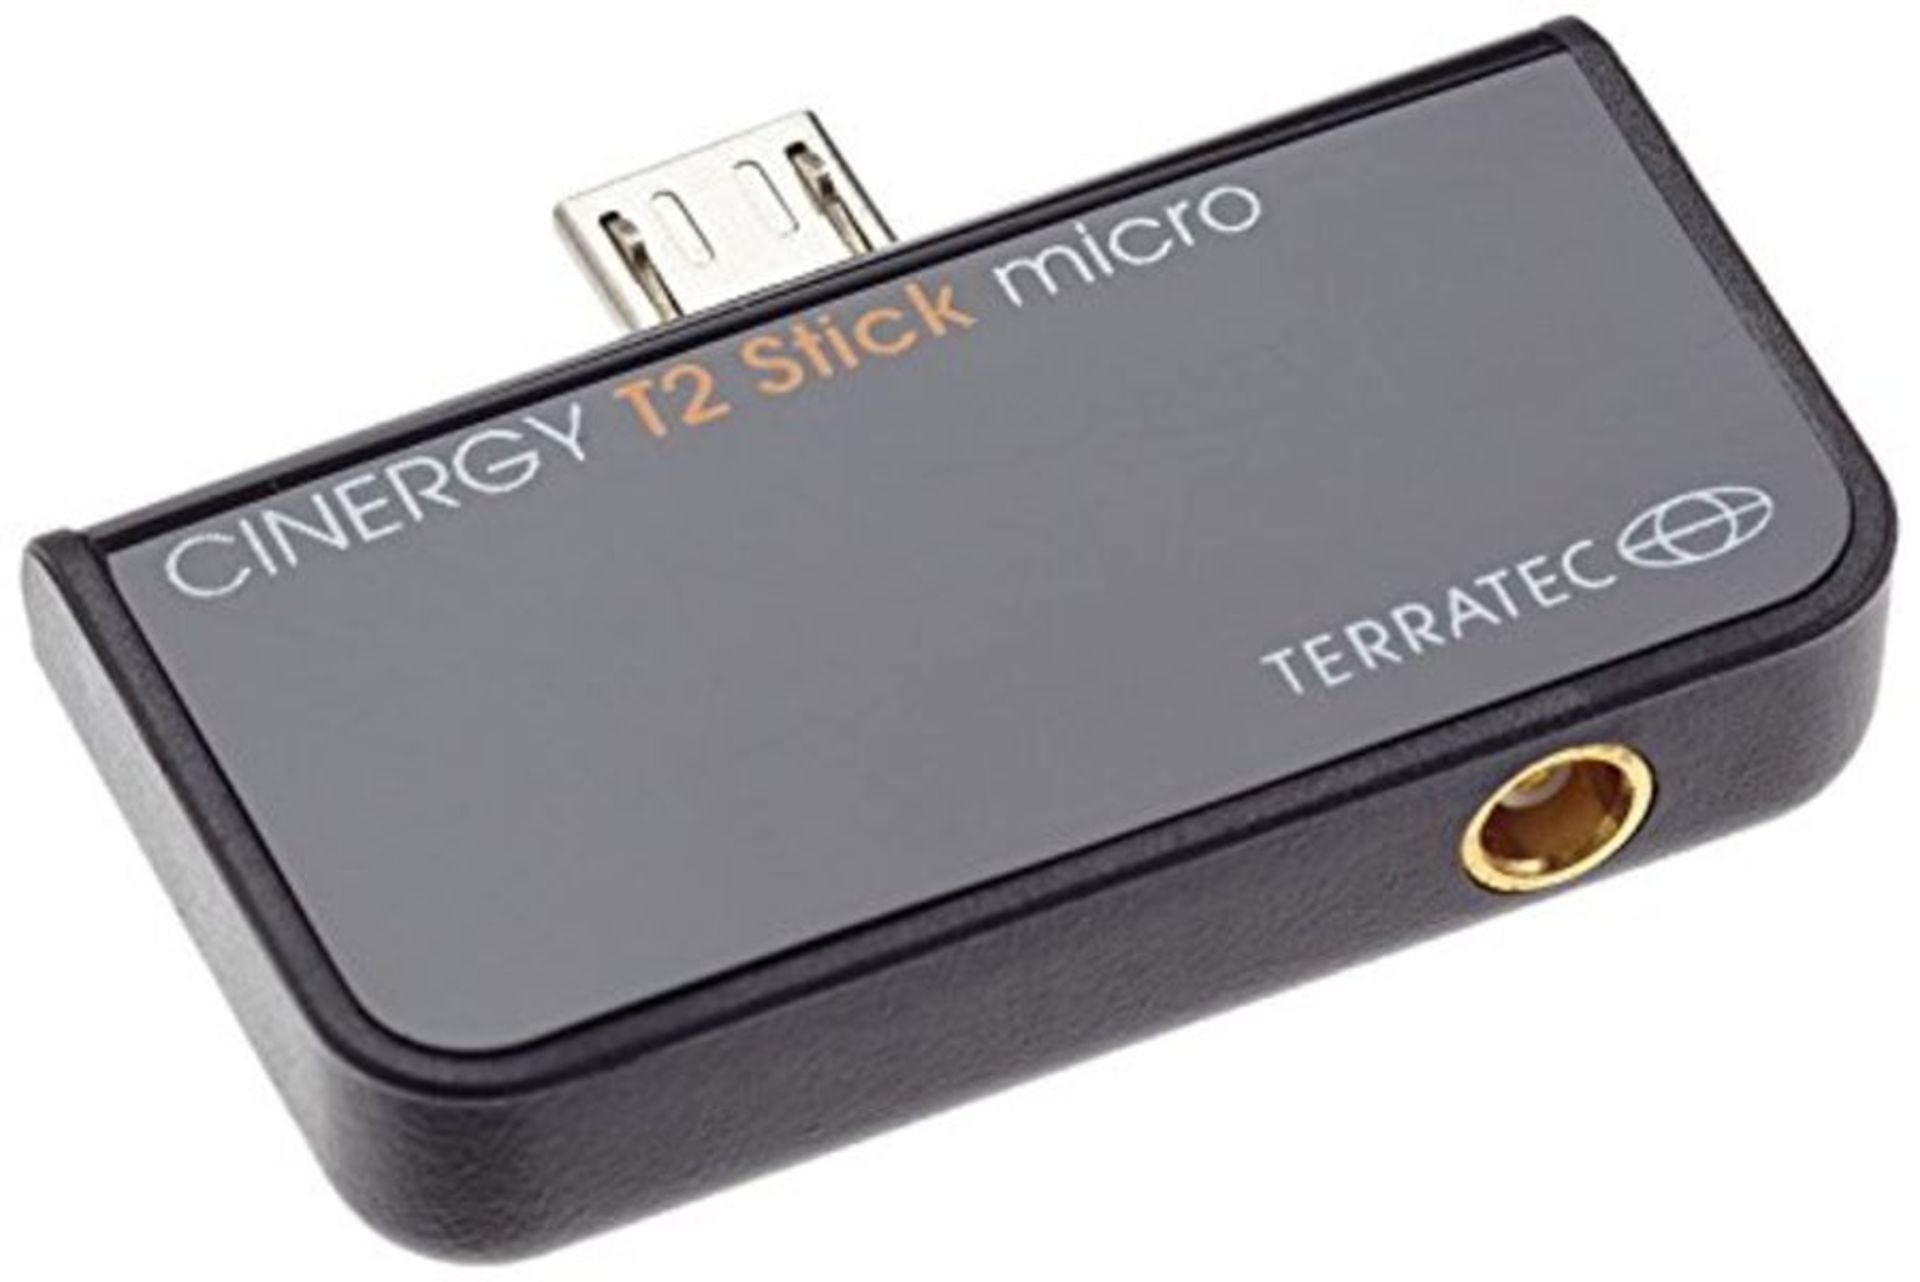 TerraTec CINERGY T2 Stick Micro - USB DVBT 2 TV Mini Receiver â¬  Macht Tablet, L